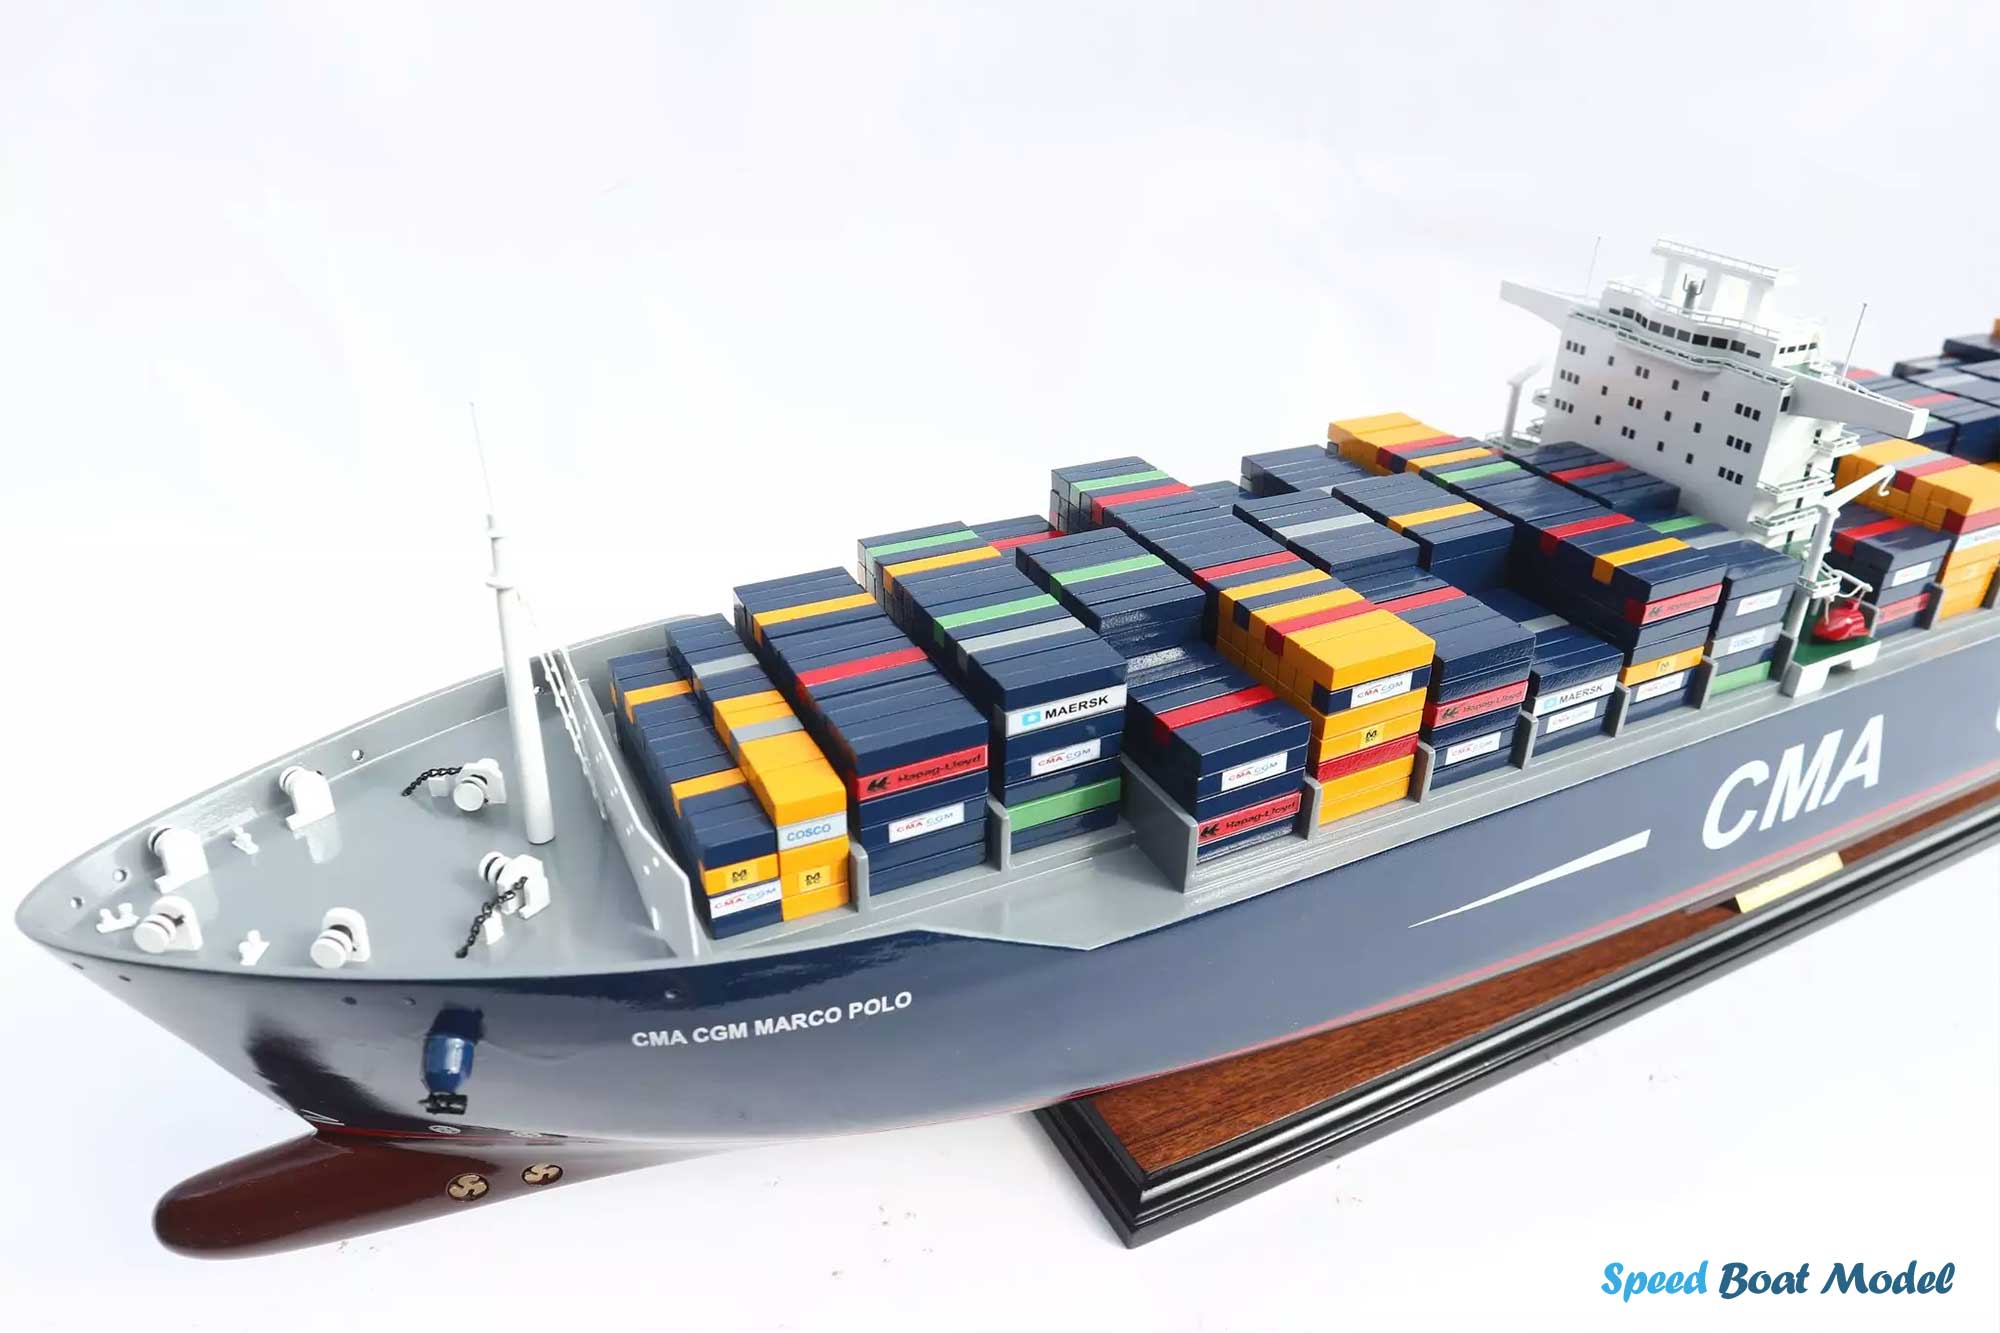 Cma Cgm Marco Polo Commercial Ship Model (3)